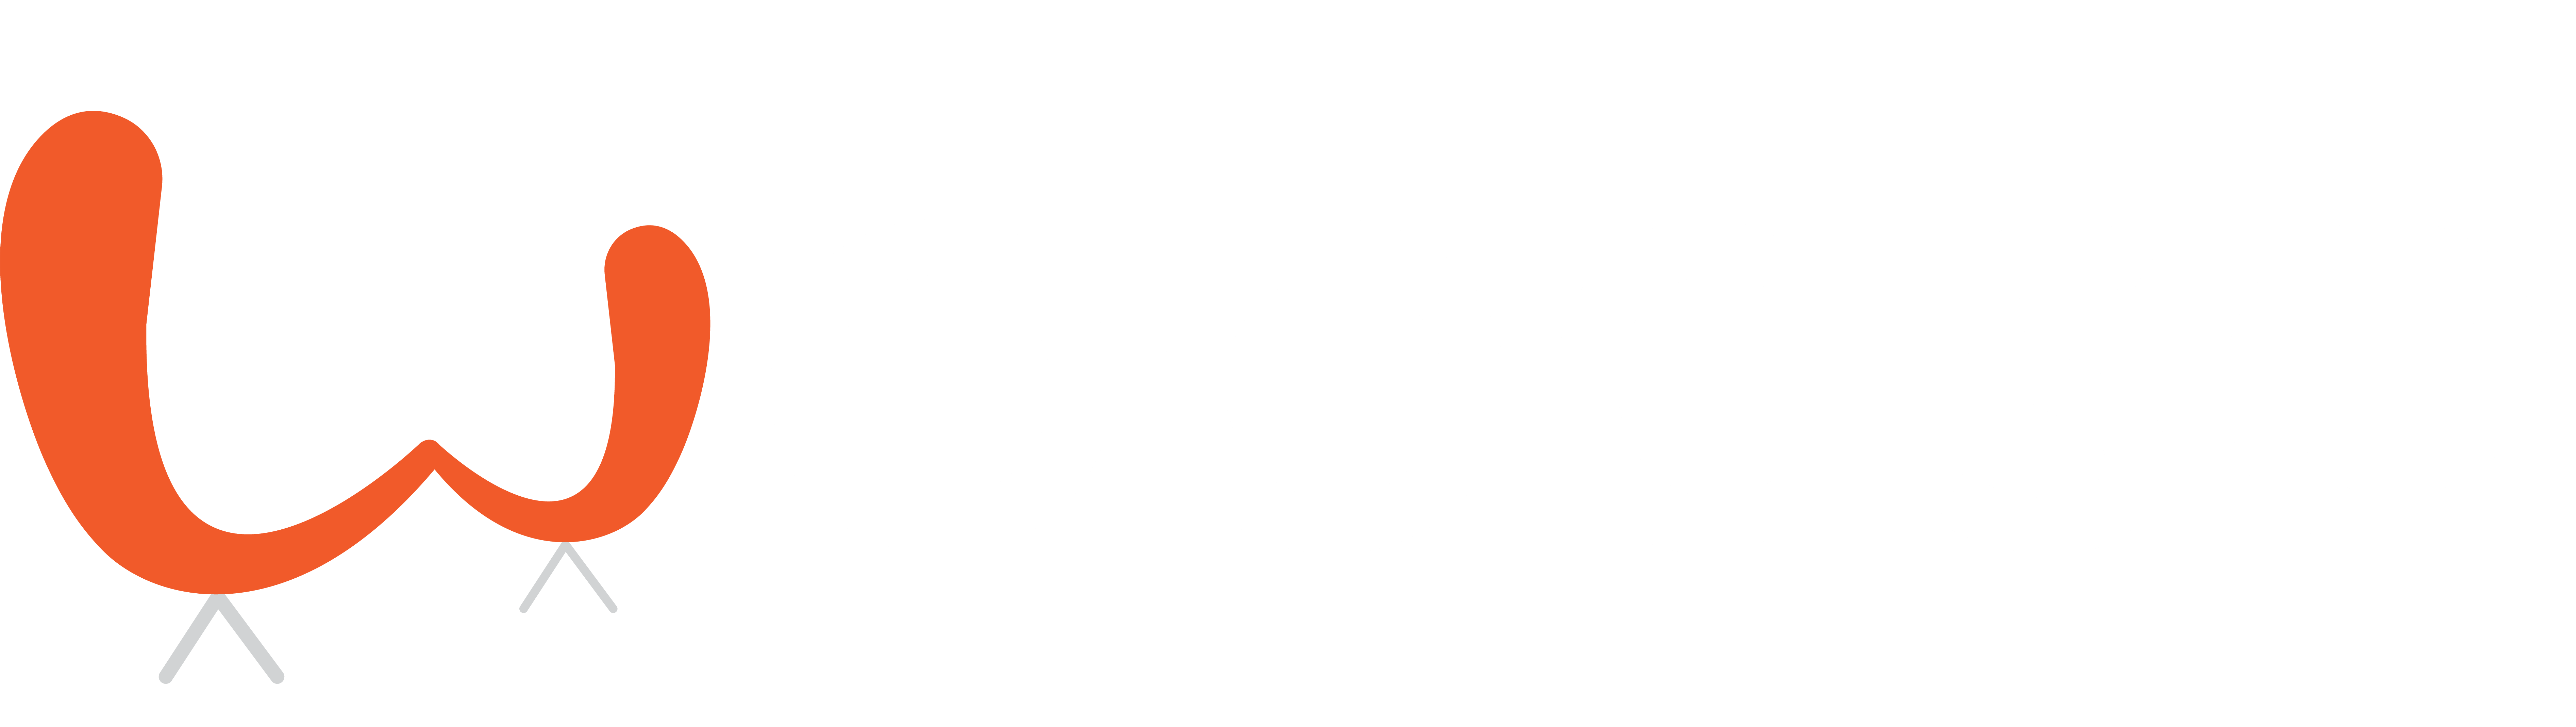 Woodse_Logo_Final